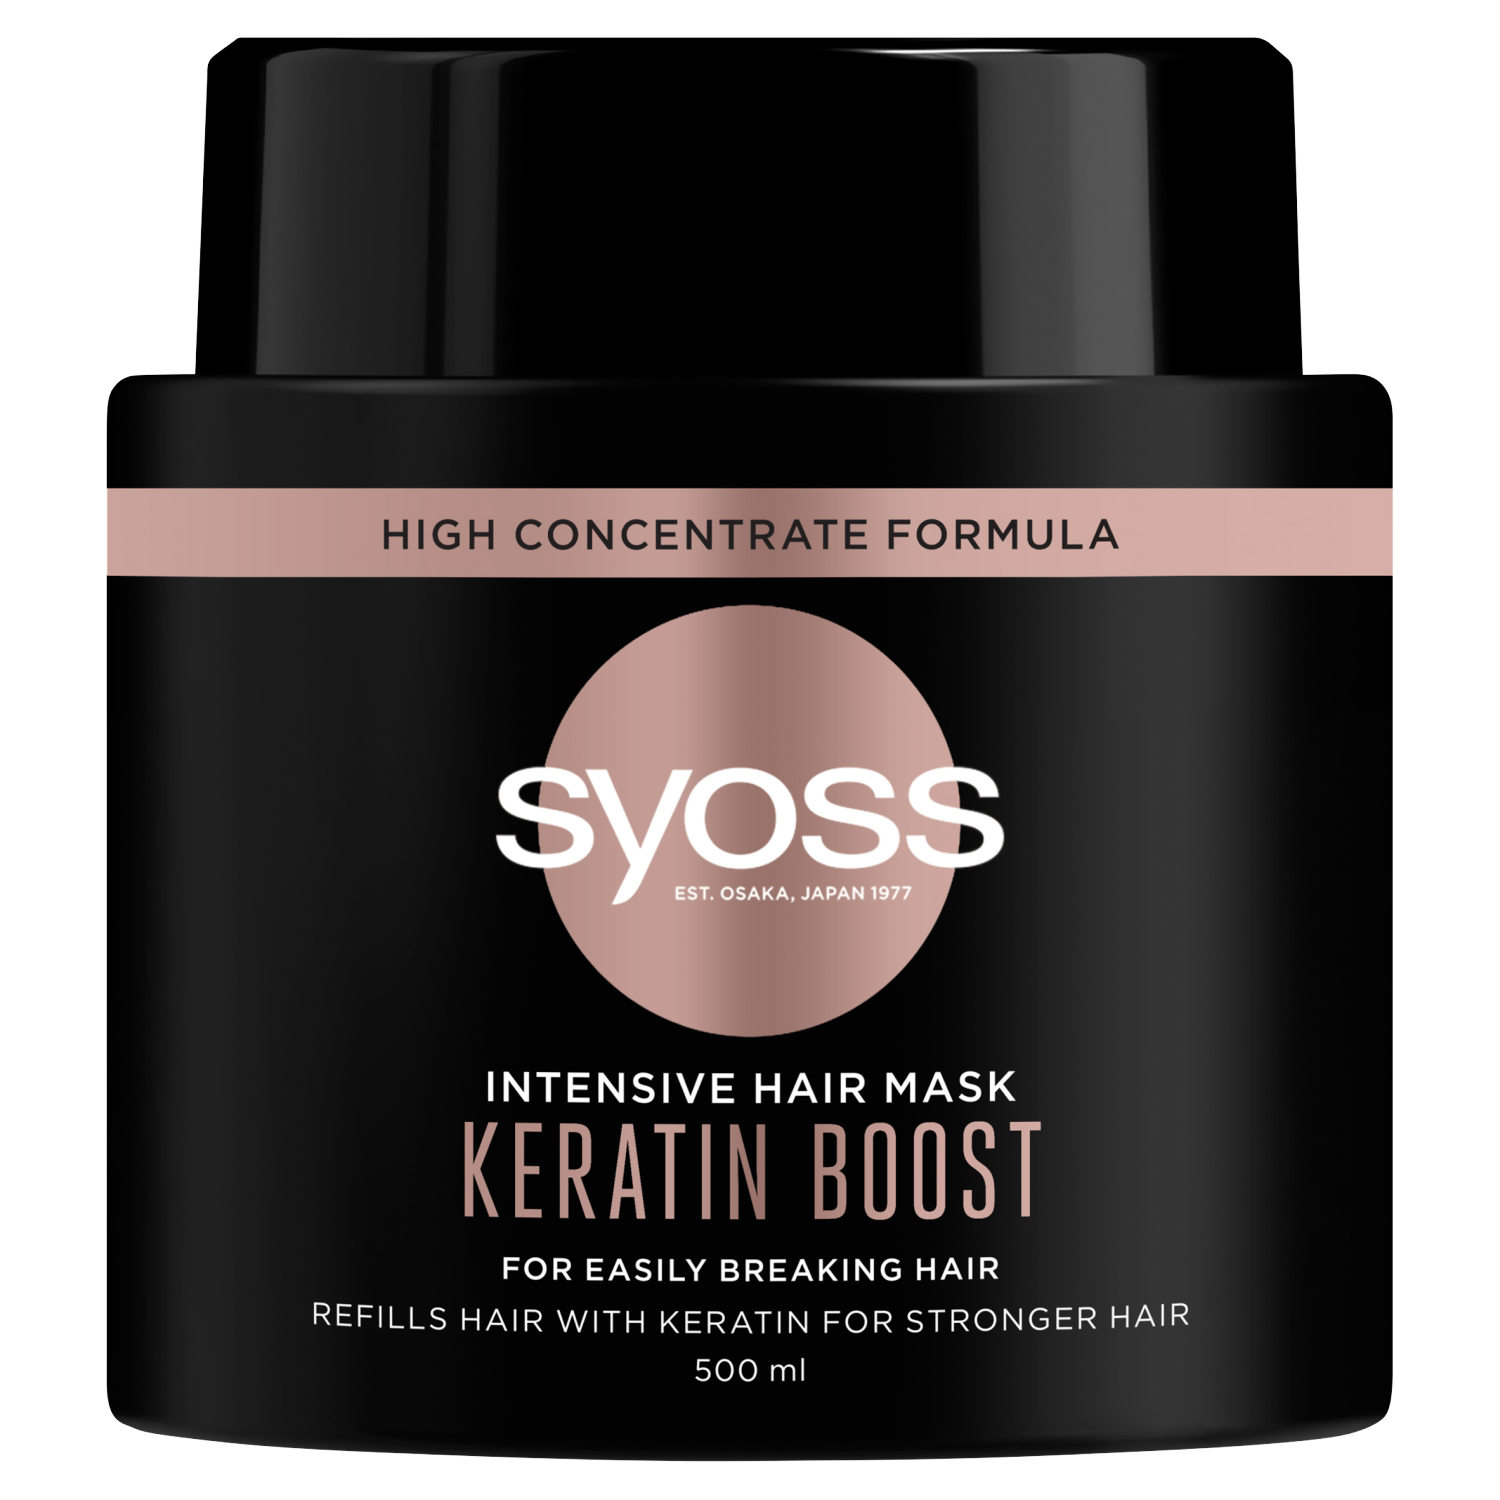 Syoss Keratin Boost интенсивно укрепляющая маска против ломкости волос с кератином, 500 мл